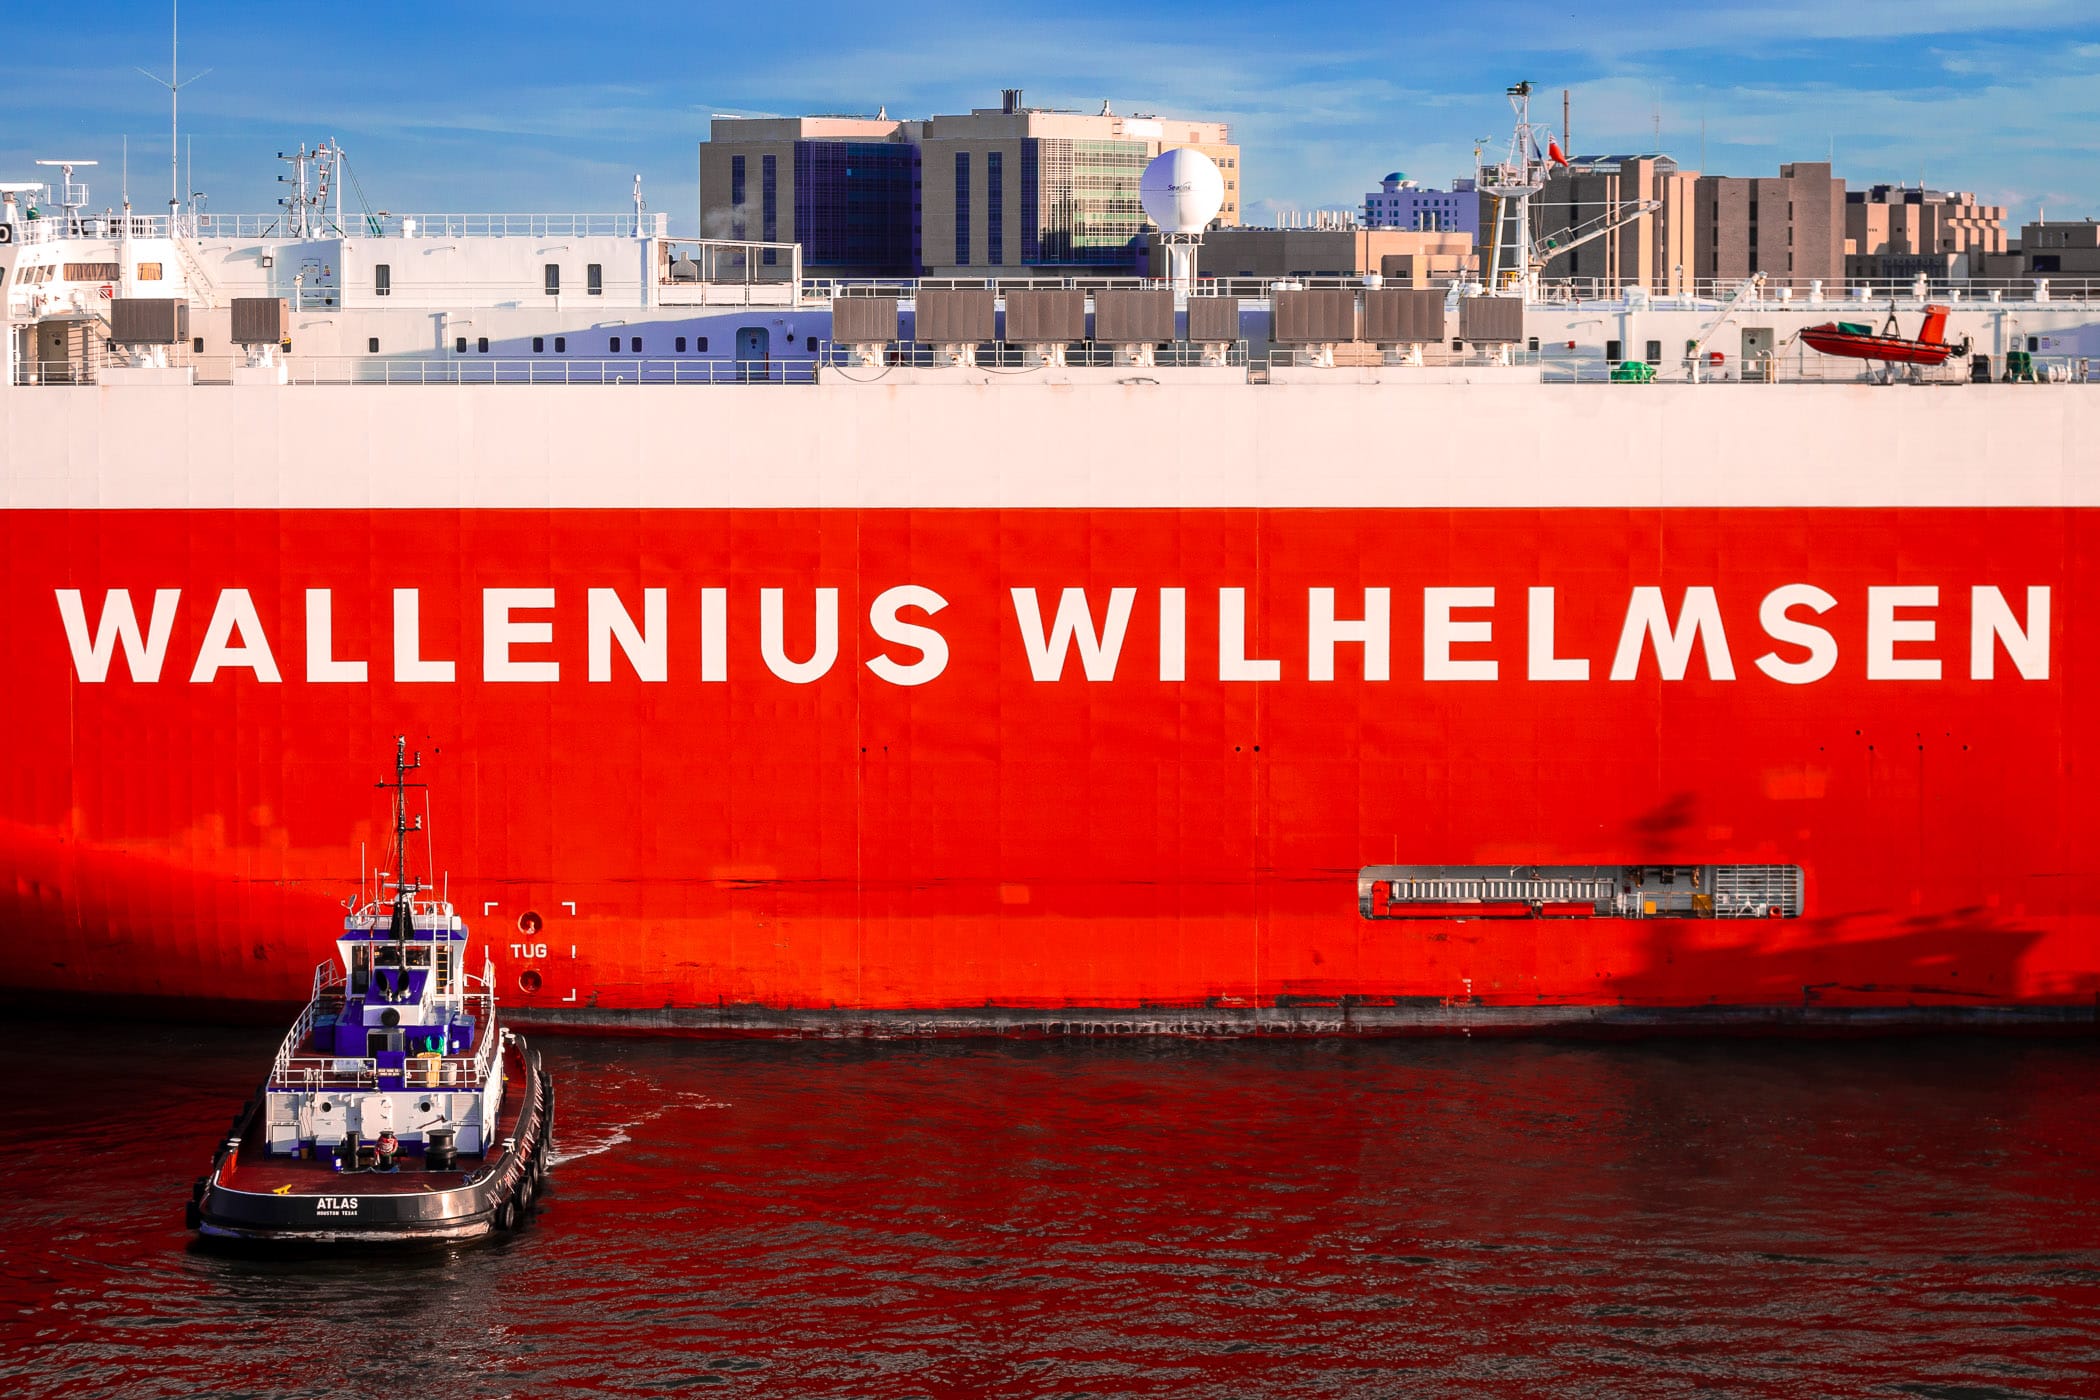 Detail of a Wallenius Wilhelmsen roll-on/roll-off vessel in the Port of Galveston, Texas.